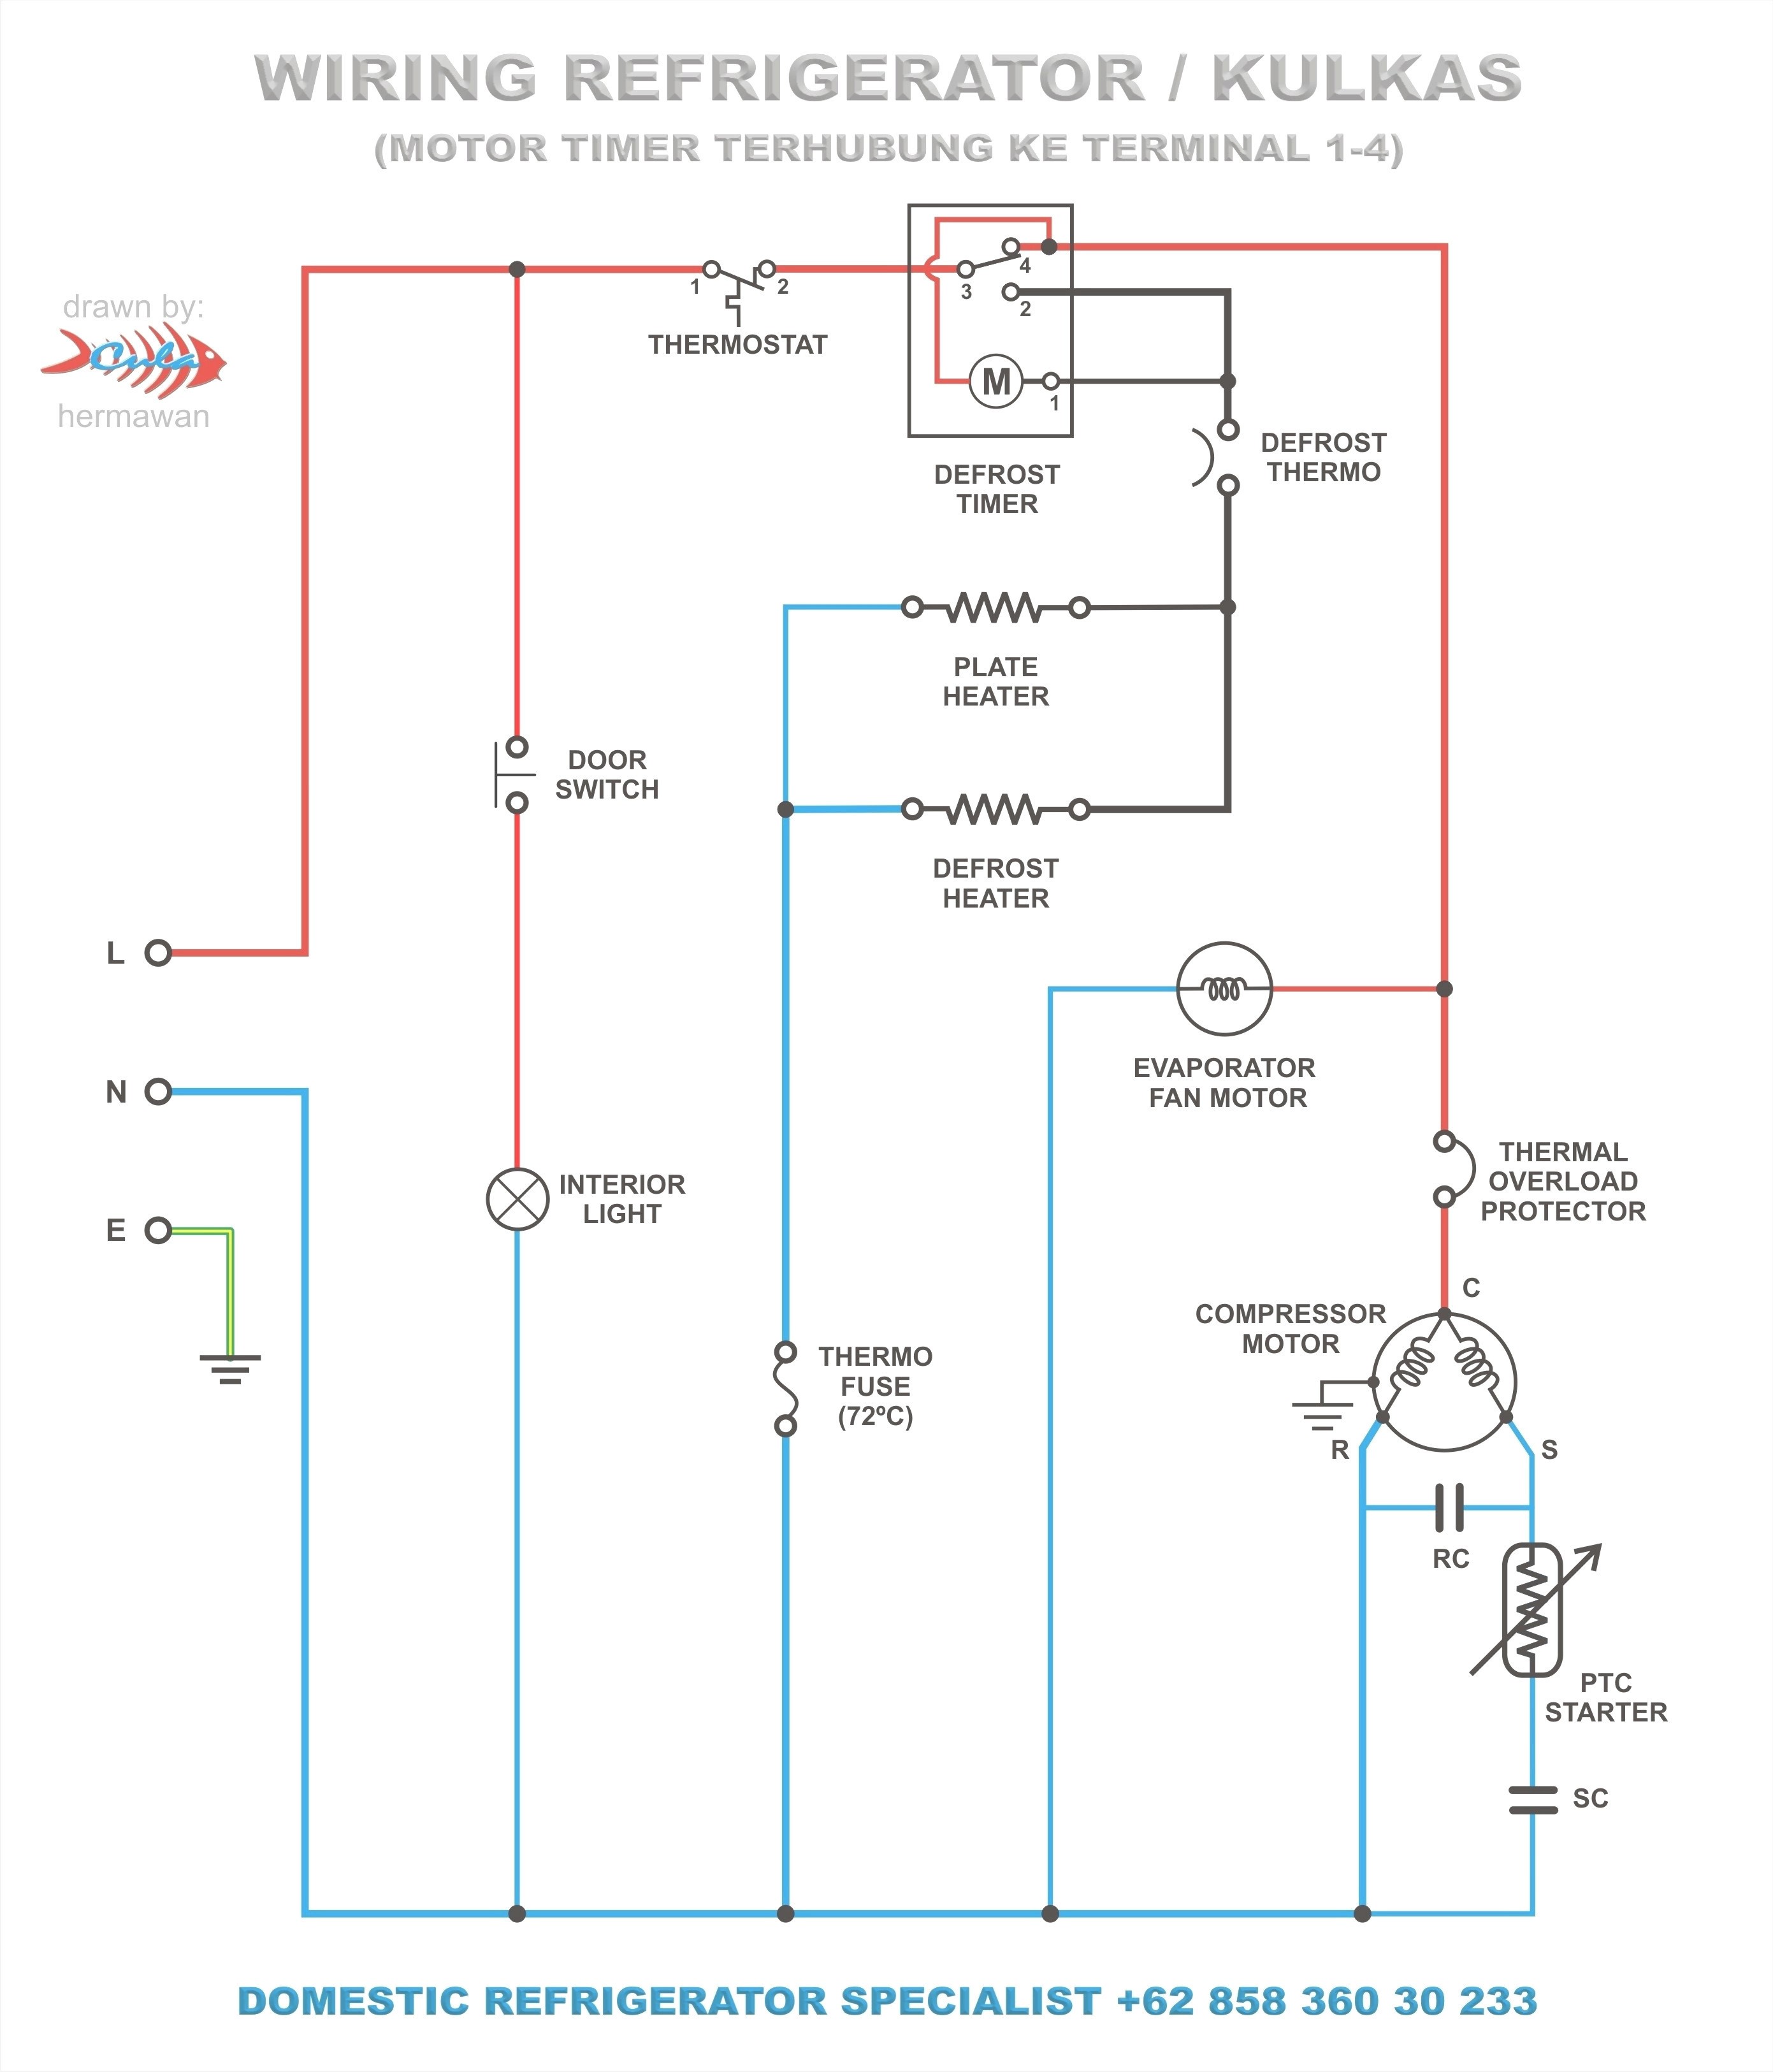 Part 5 Wiring diagram Electrical wiring Circuit diagram Schematic